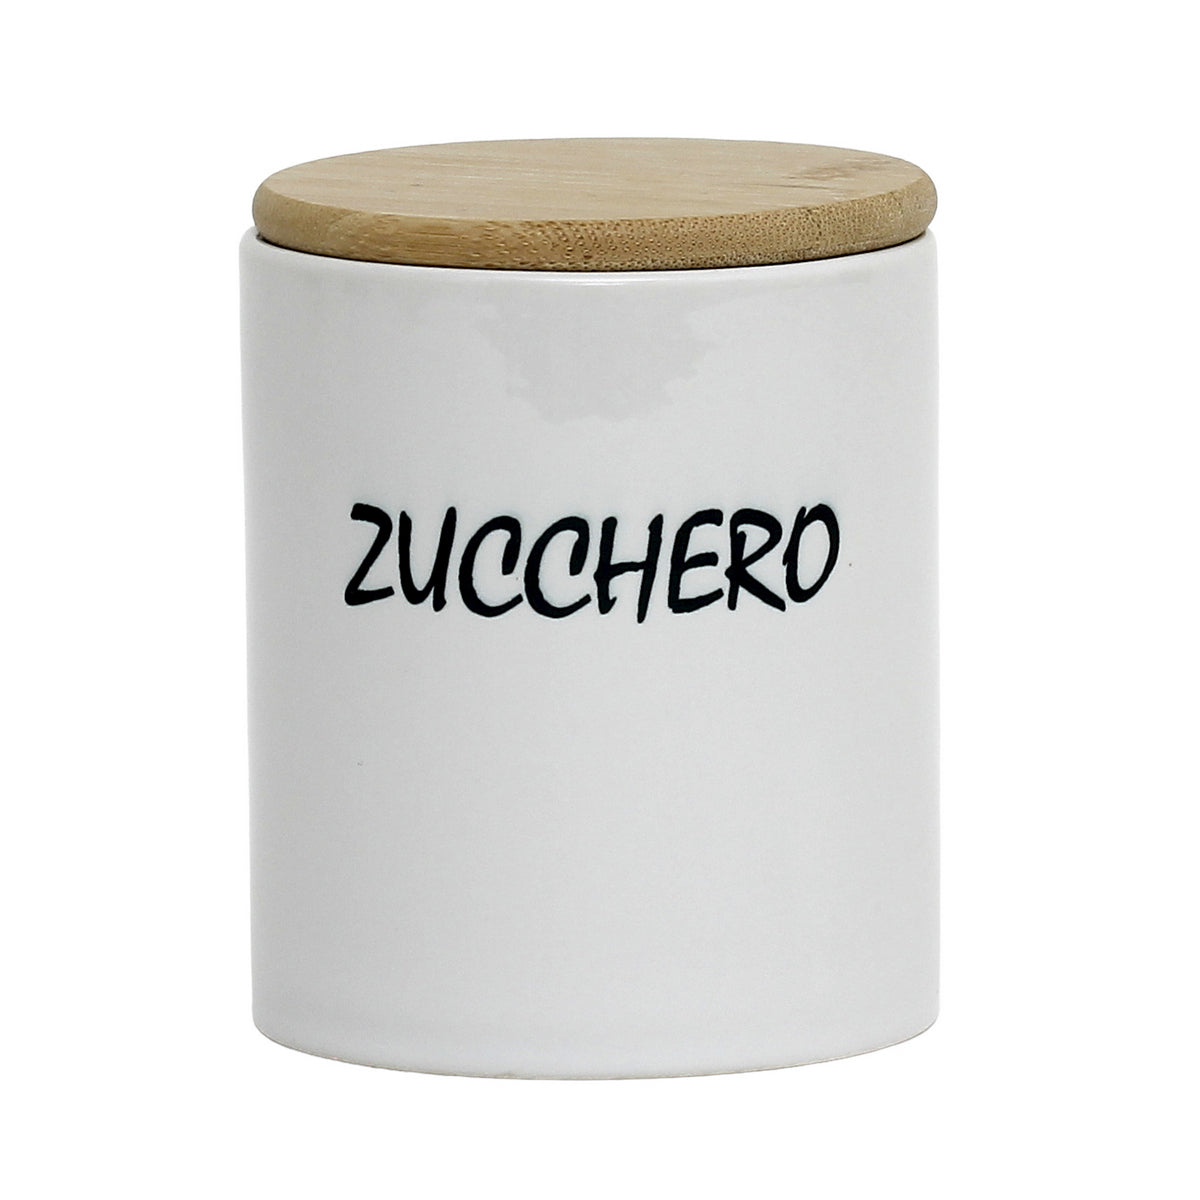 SUBLIMART: Porcelain storage jar with sealing bamboo lid 'ZUCCHERO' (Sugar)